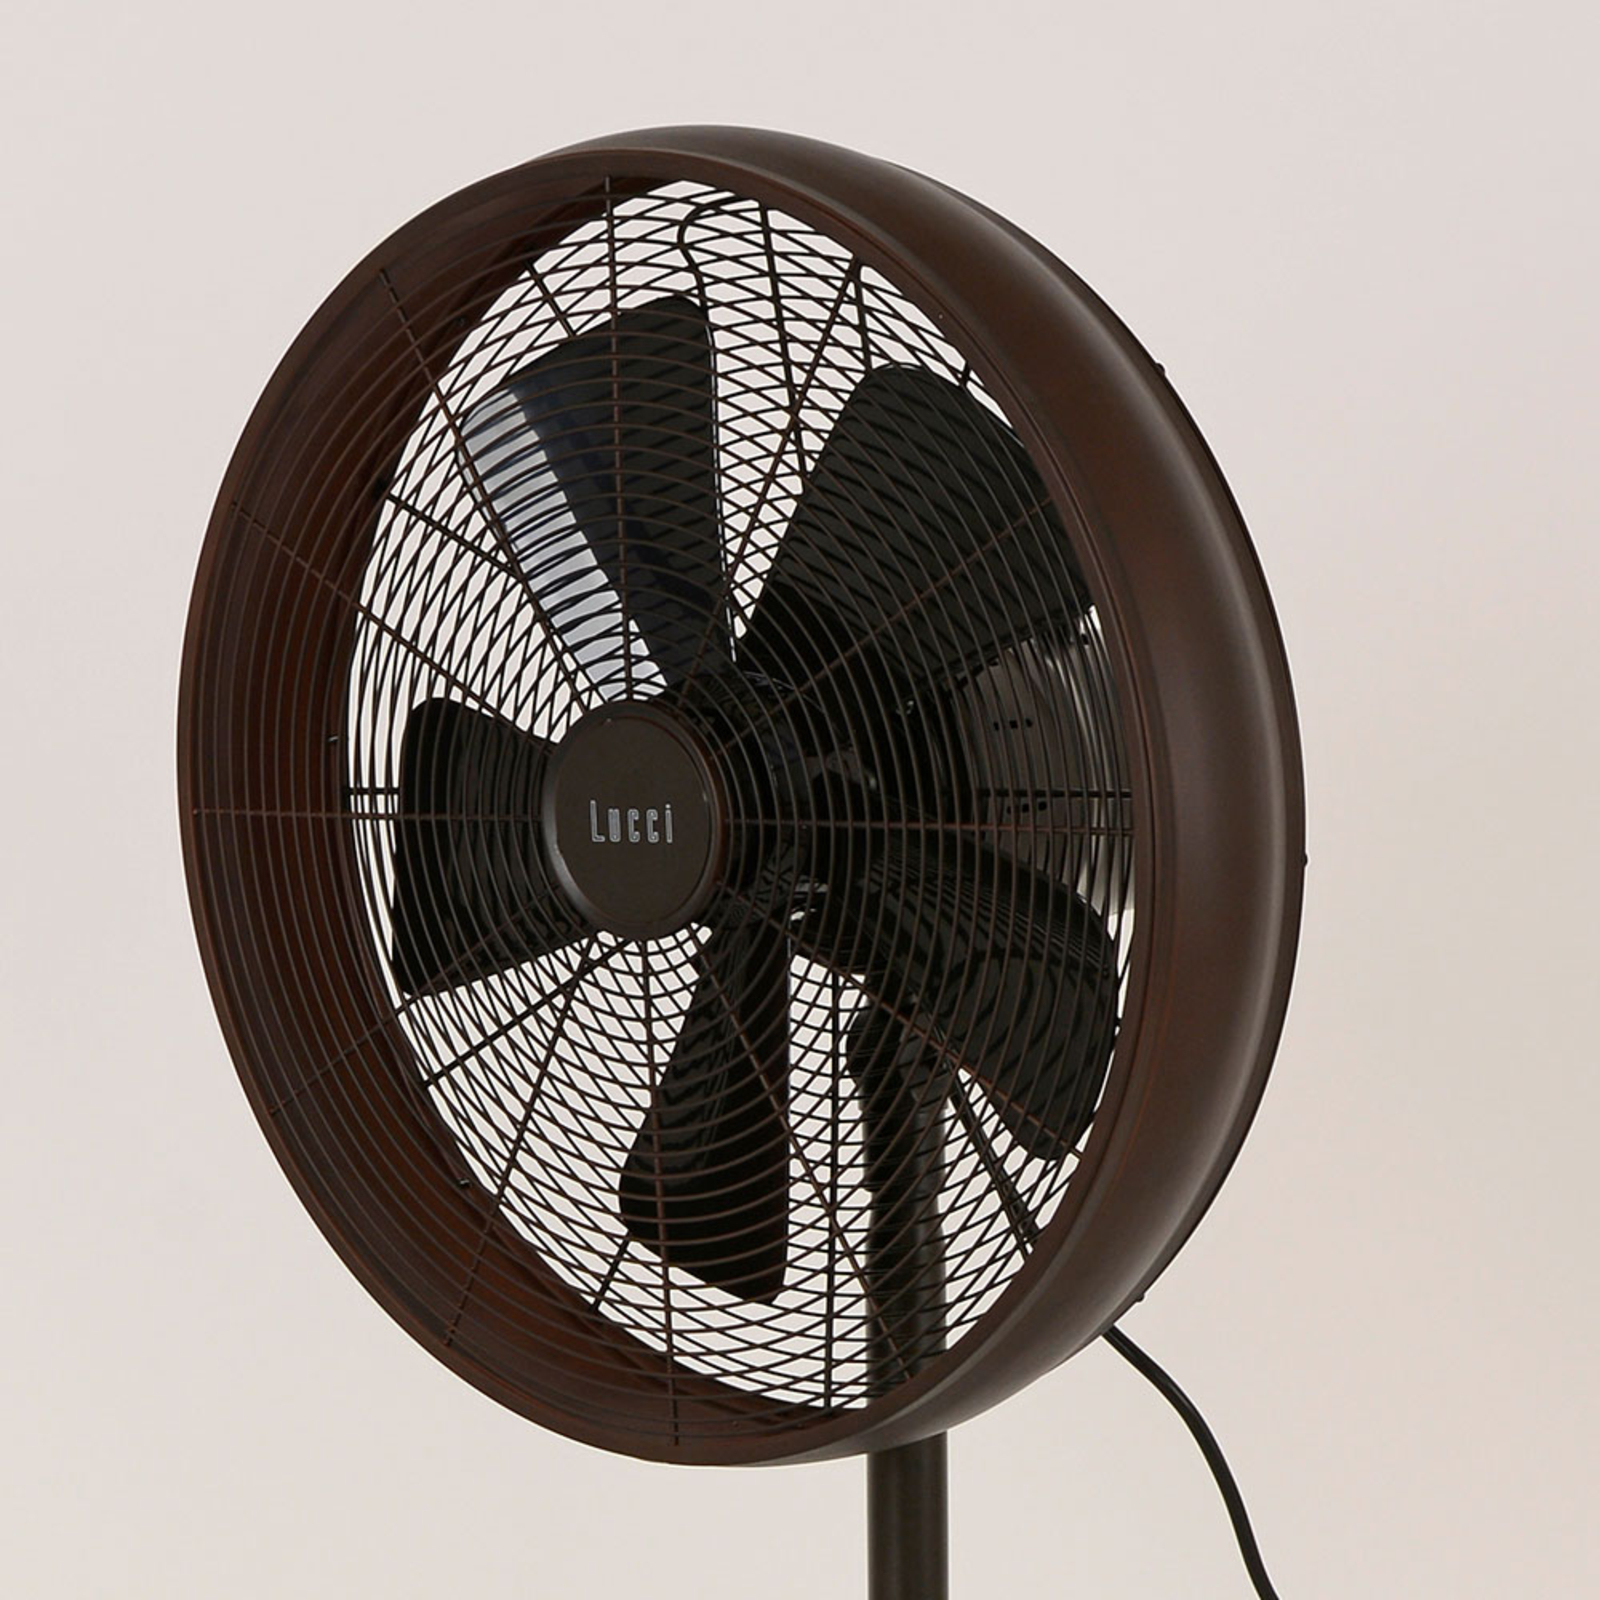 Podstavný ventilátor Beacon Breeze bronzové barvy, kulatá základna, tichý